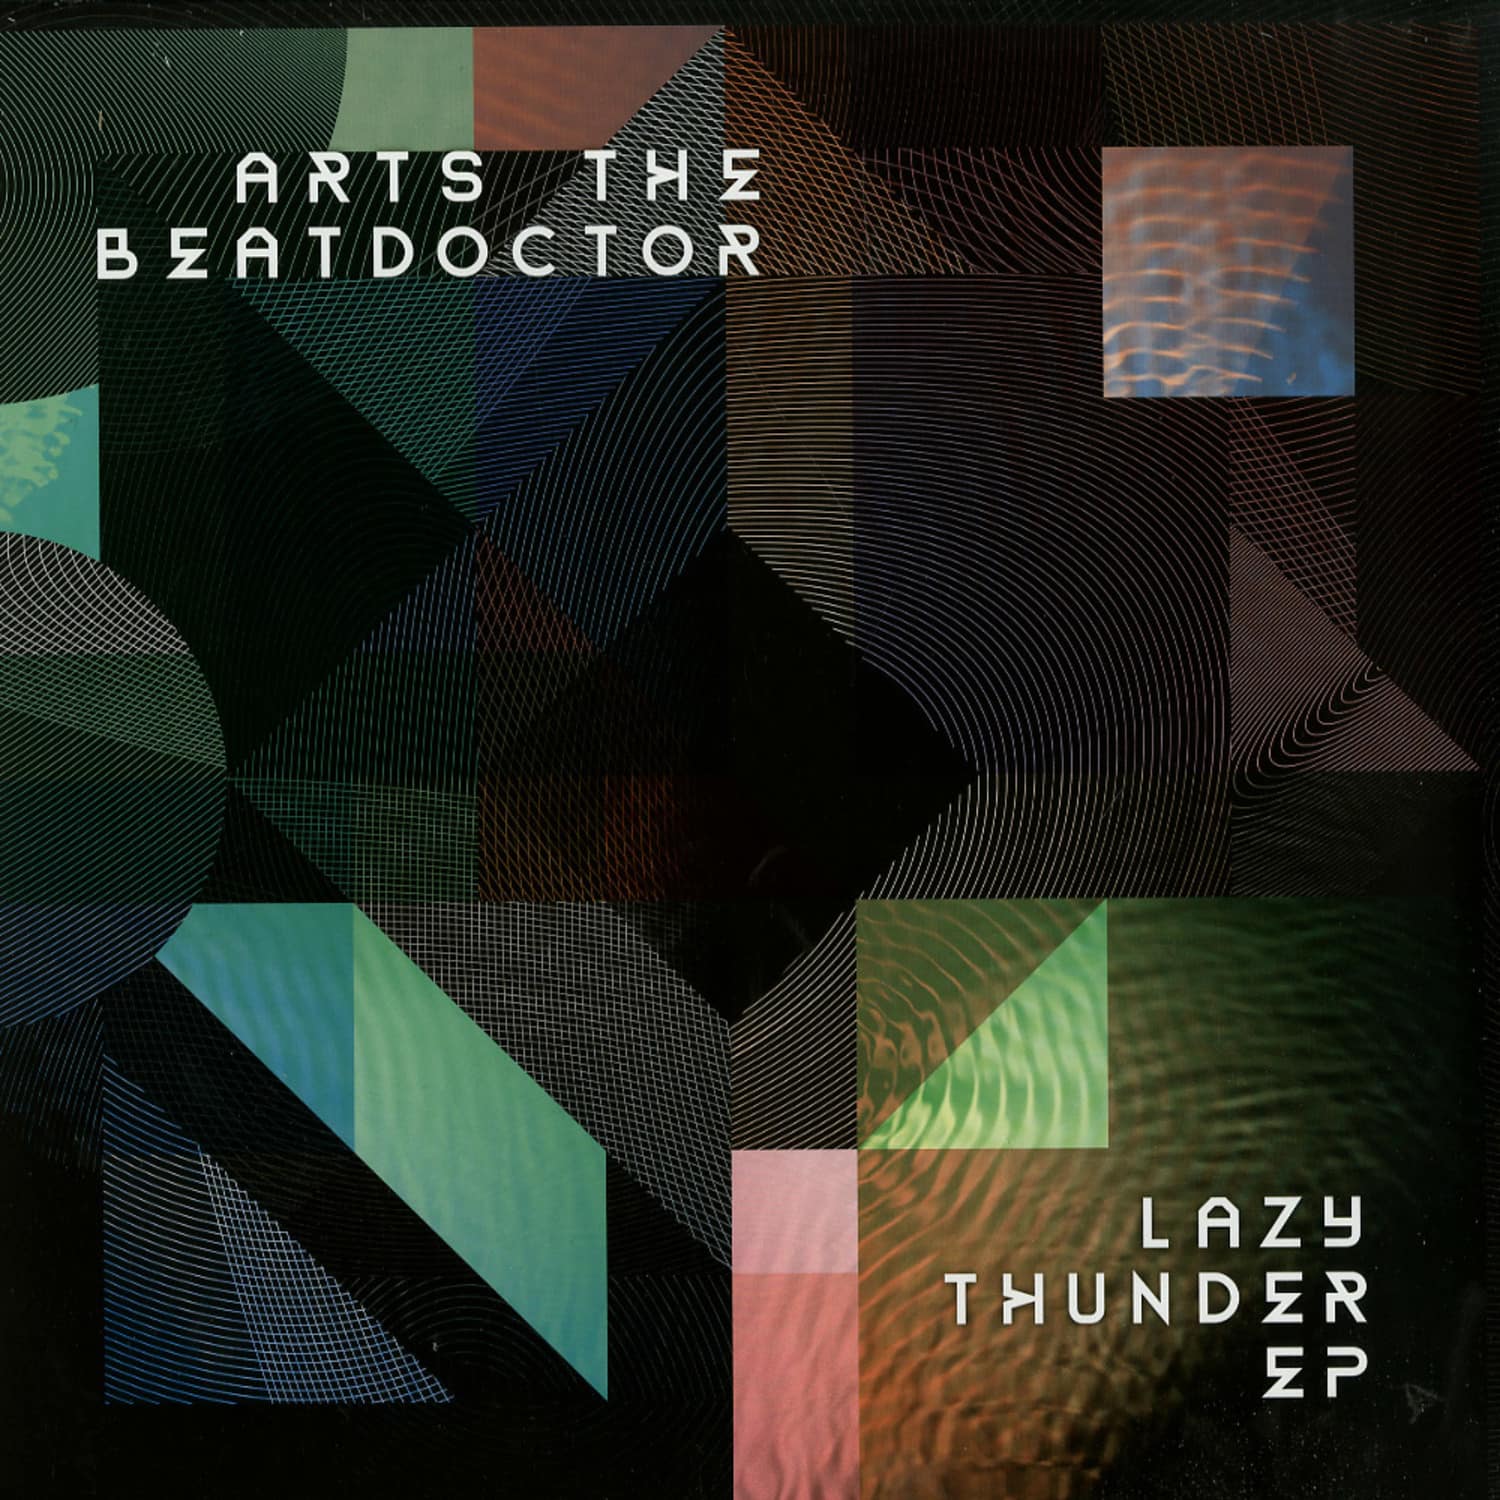 Arts The Beatdoctor - LAZY THUNDER EP 